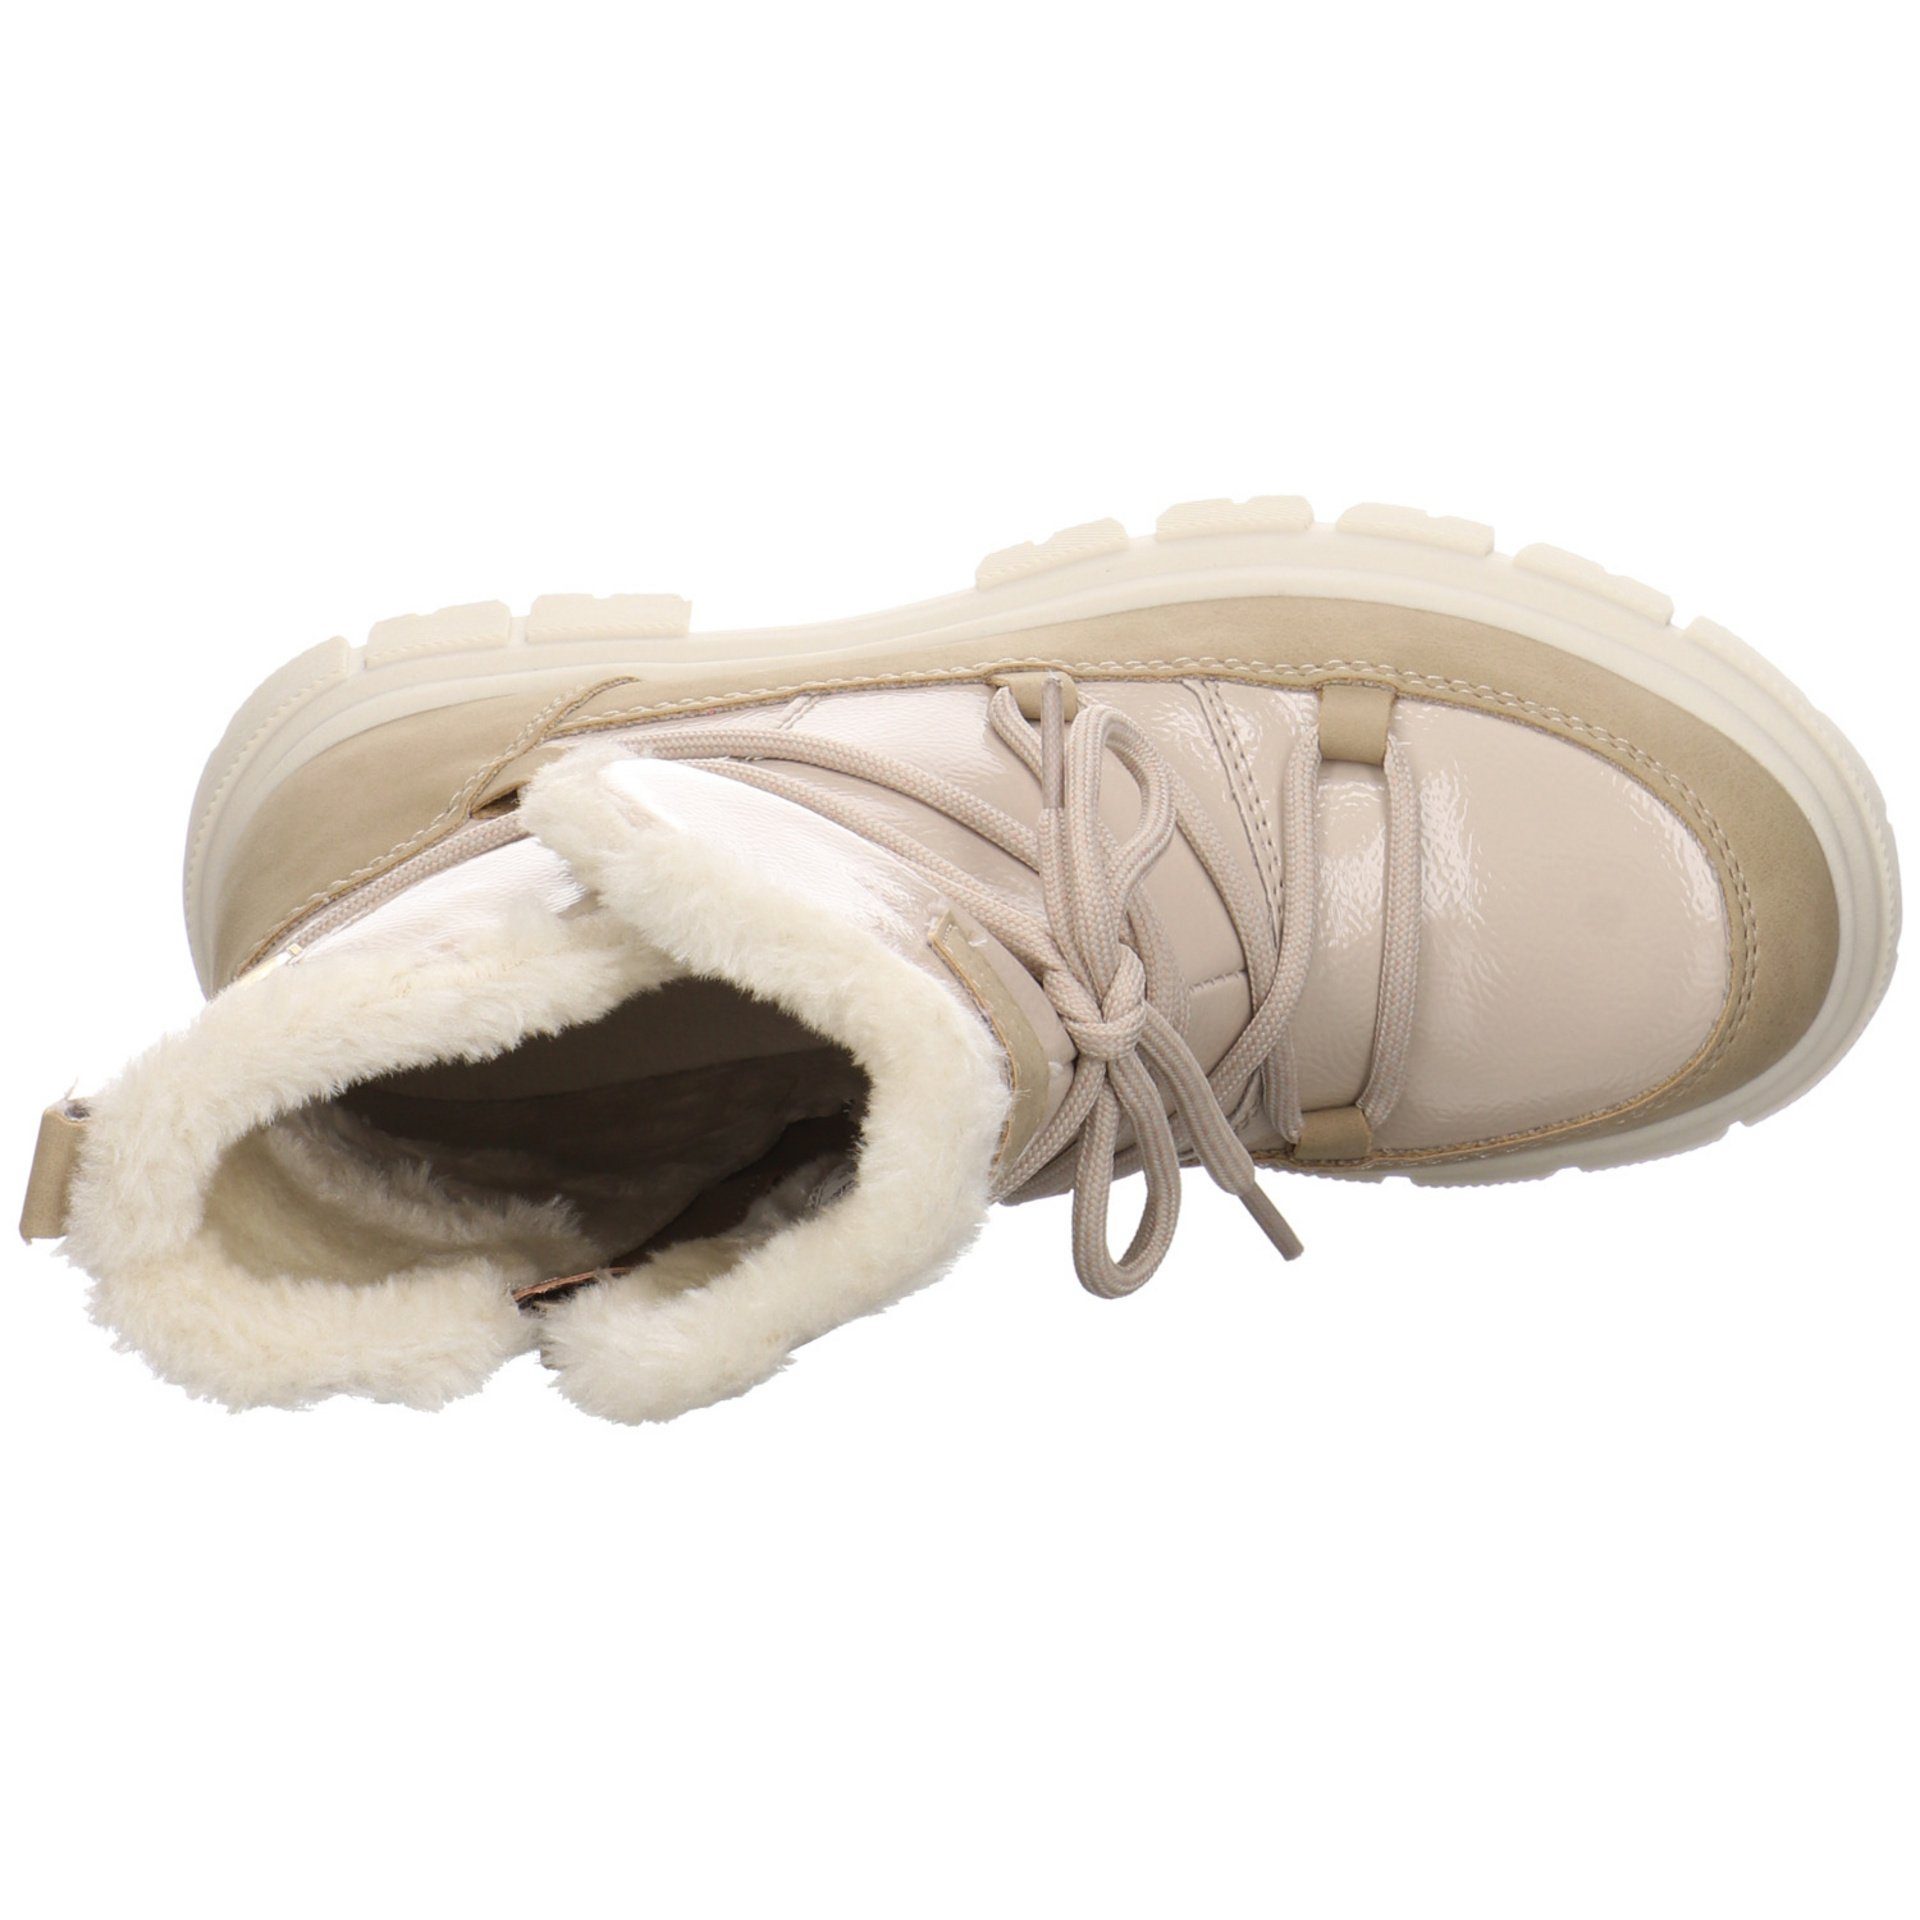 Stiefel beige Kinderschuhe TOM Schuhe Stiefelette Synthetikkombination Mädchen Boots TAILOR